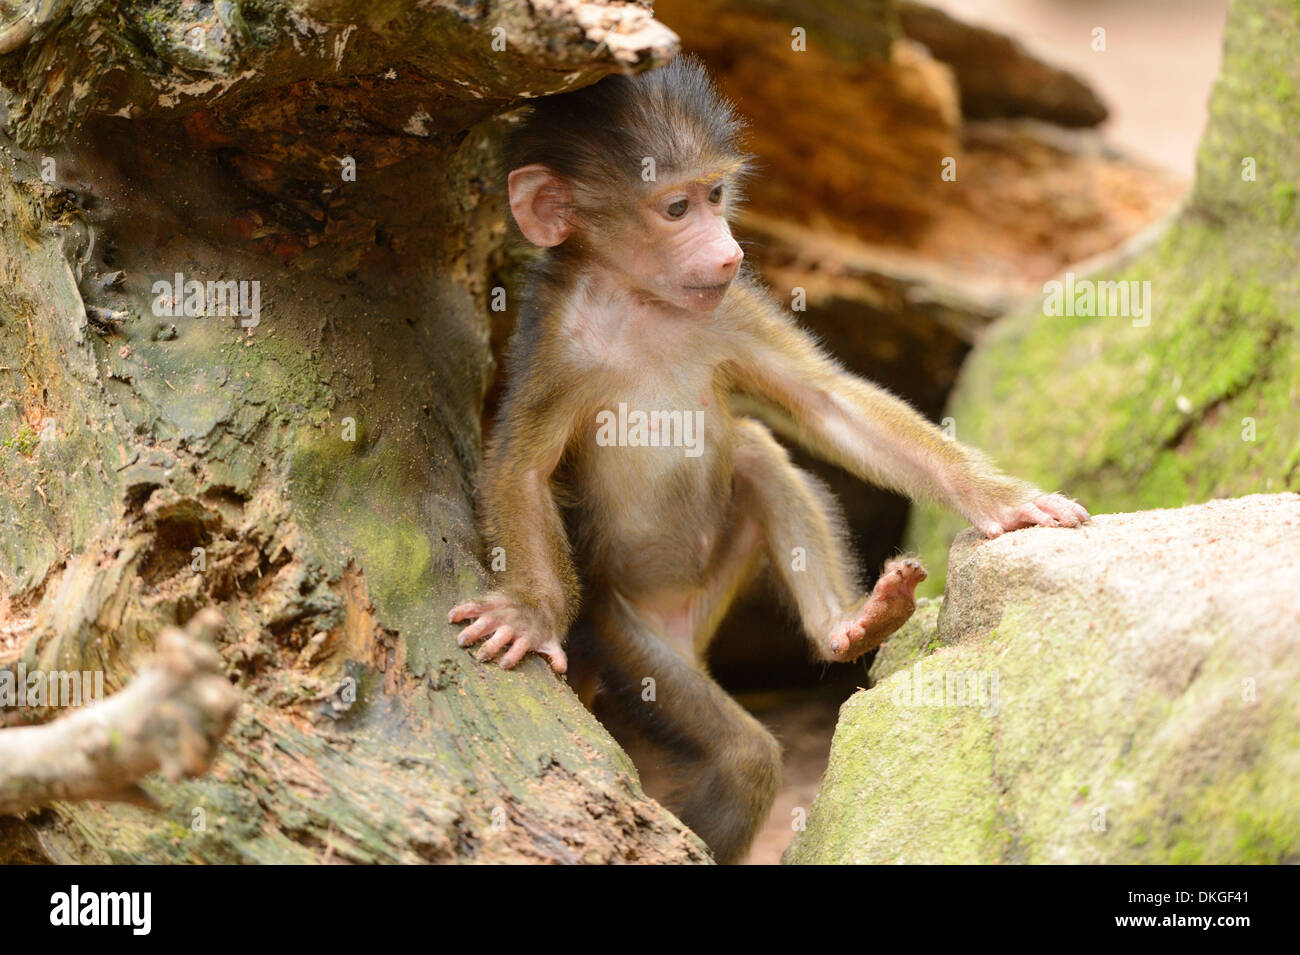 Guinea baboon (Papio papio) youngster Stock Photo